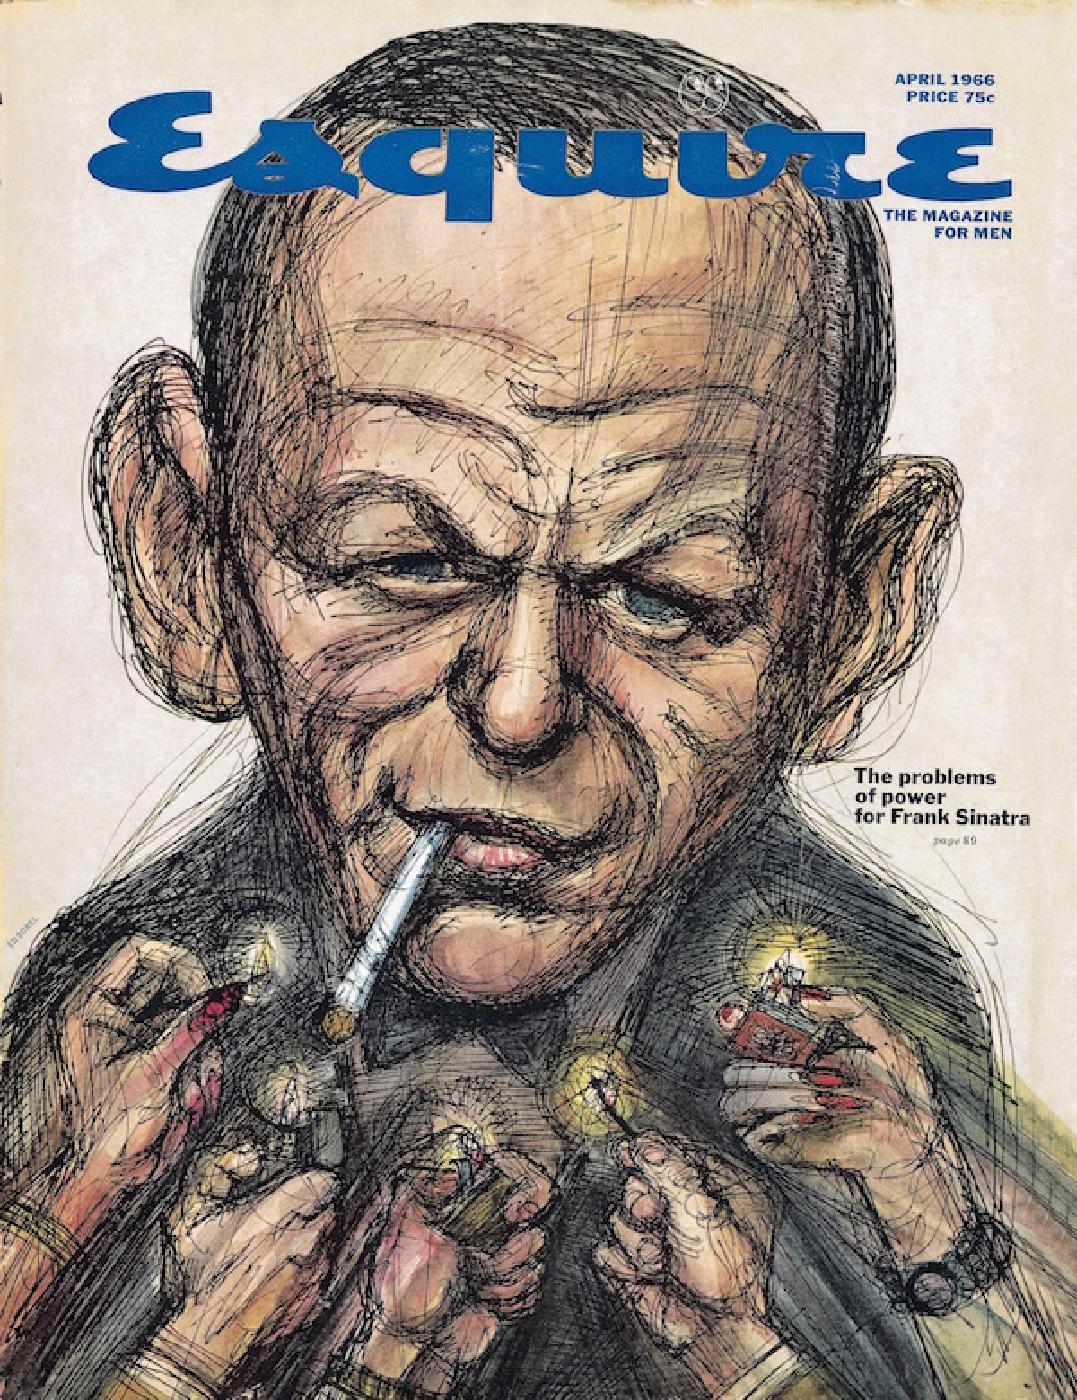                             The April 1966 cover of <em>Esquire</em>, illustrated by Ed Sorel